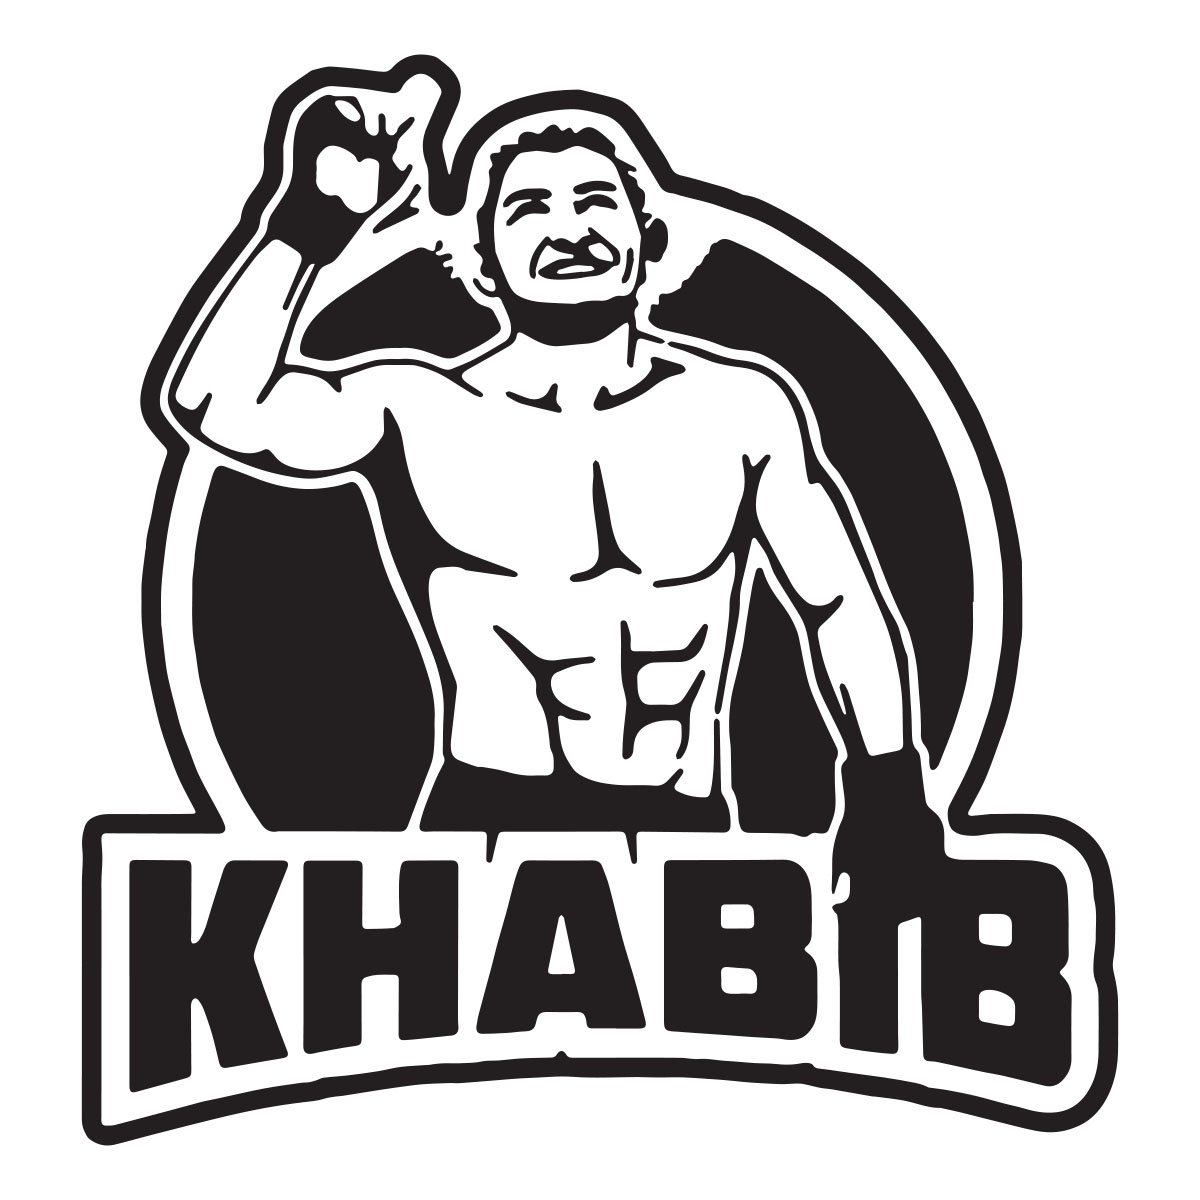 Khabib UFC fighter